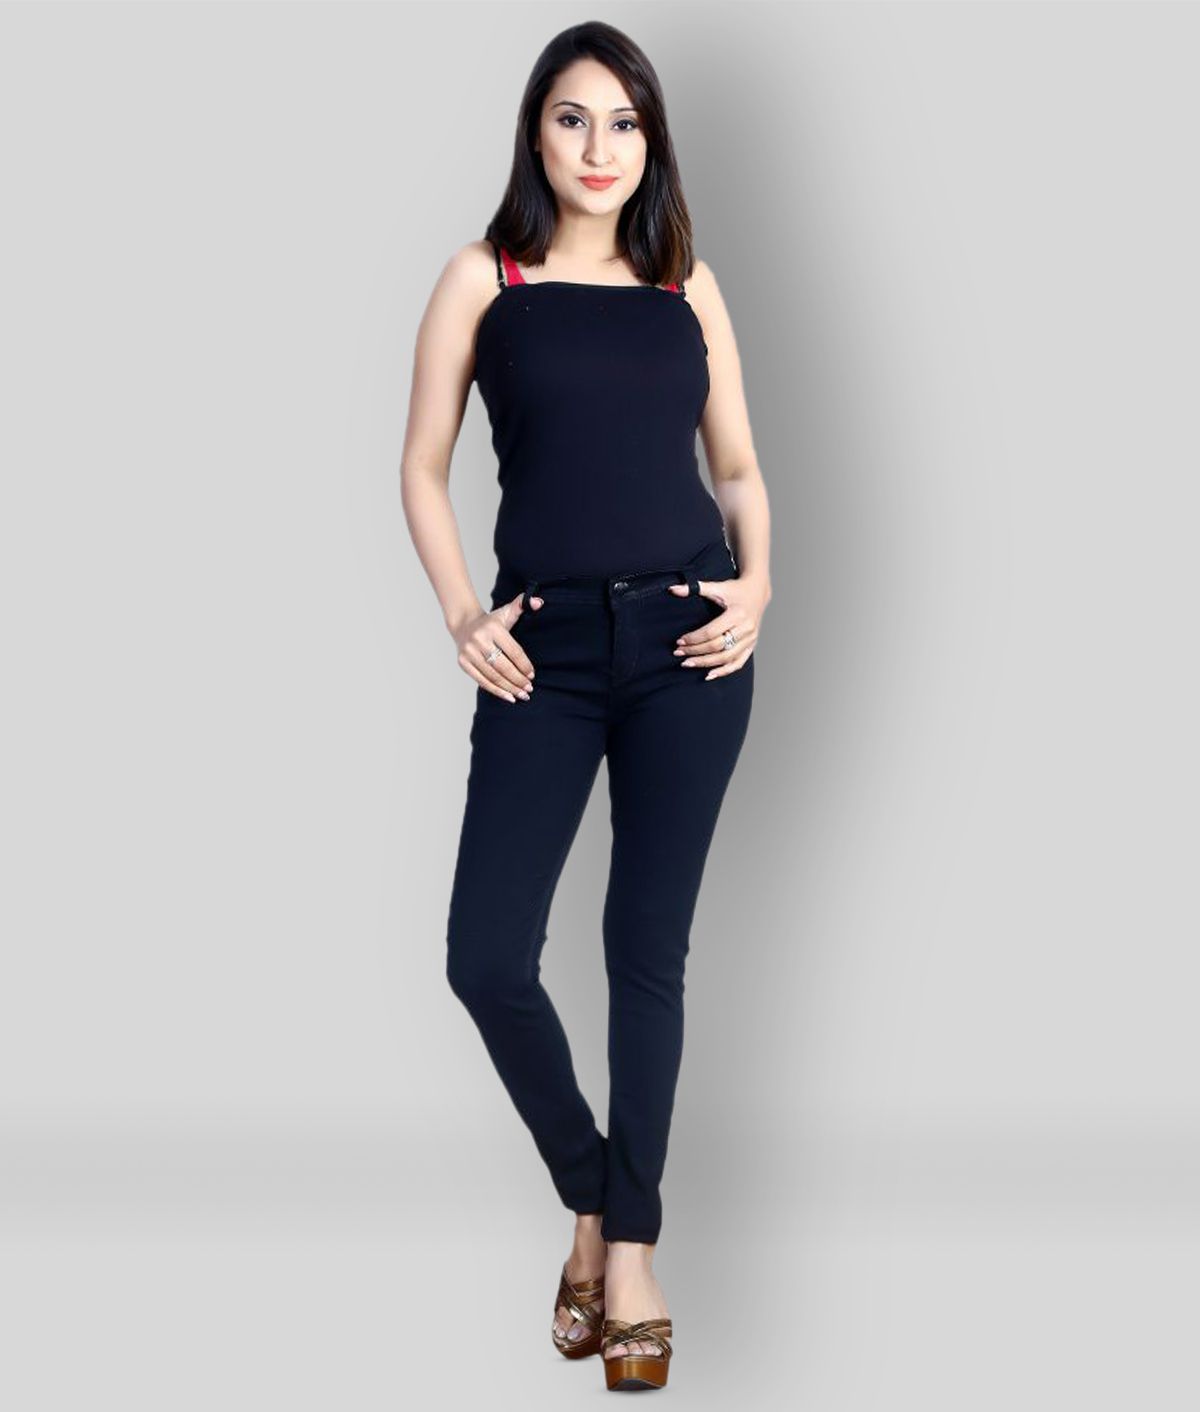 NiNe-Xm - Navy Blue Denim Lycra Women's Jeans ( Pack of 1 )